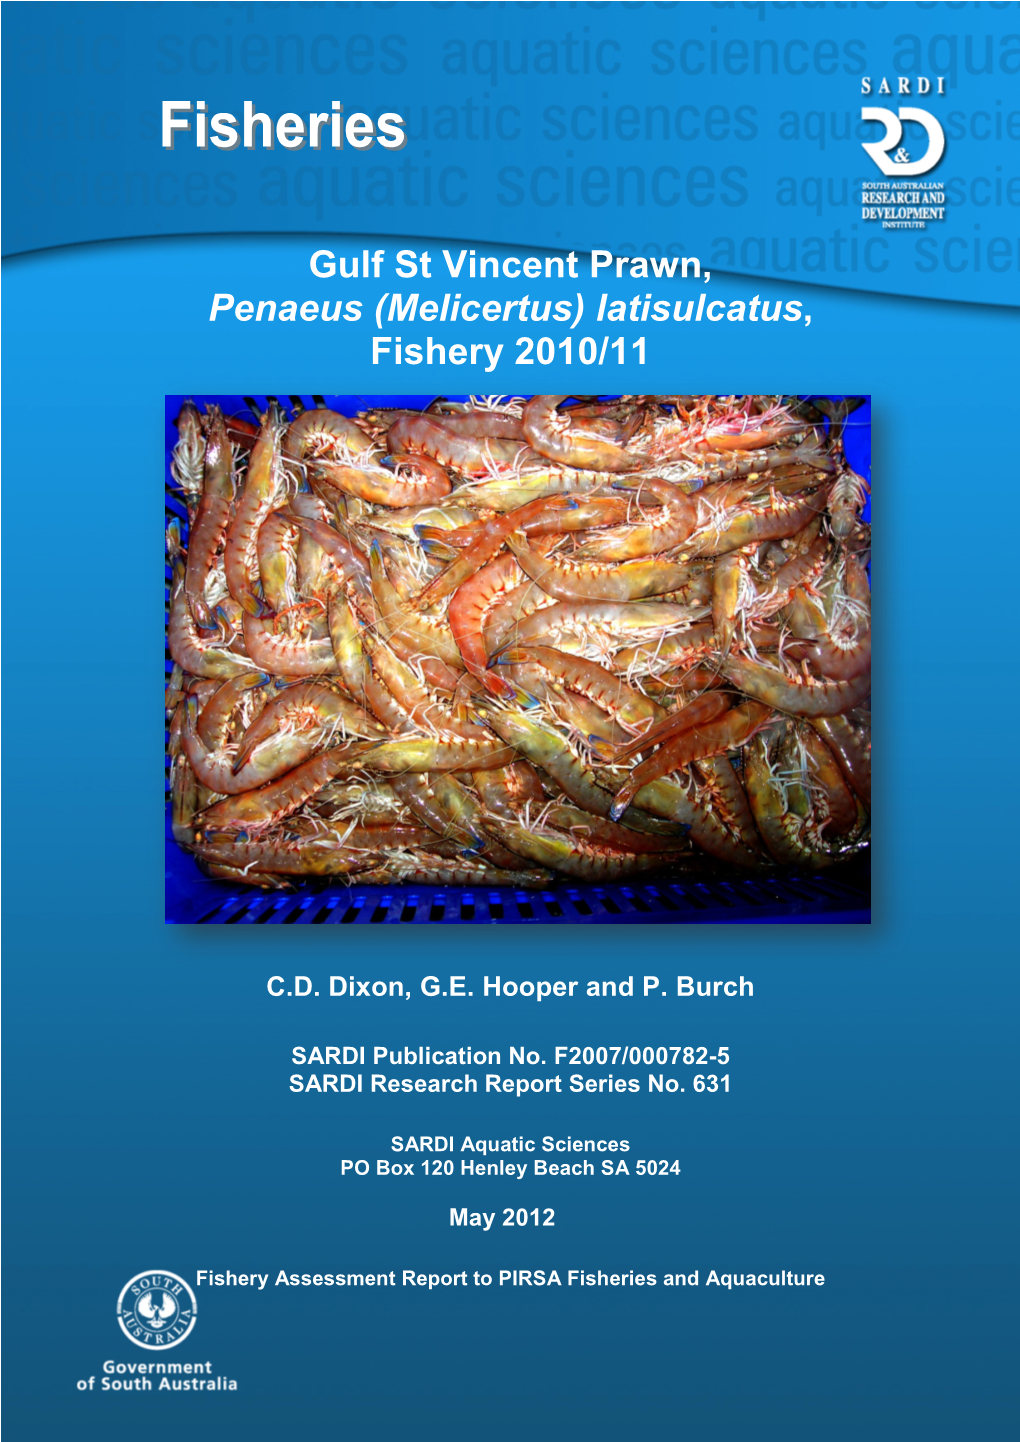 Gulf St Vincent Prawn, Penaeus (Melicertus) Latisulcatus, Fishery 2010/11